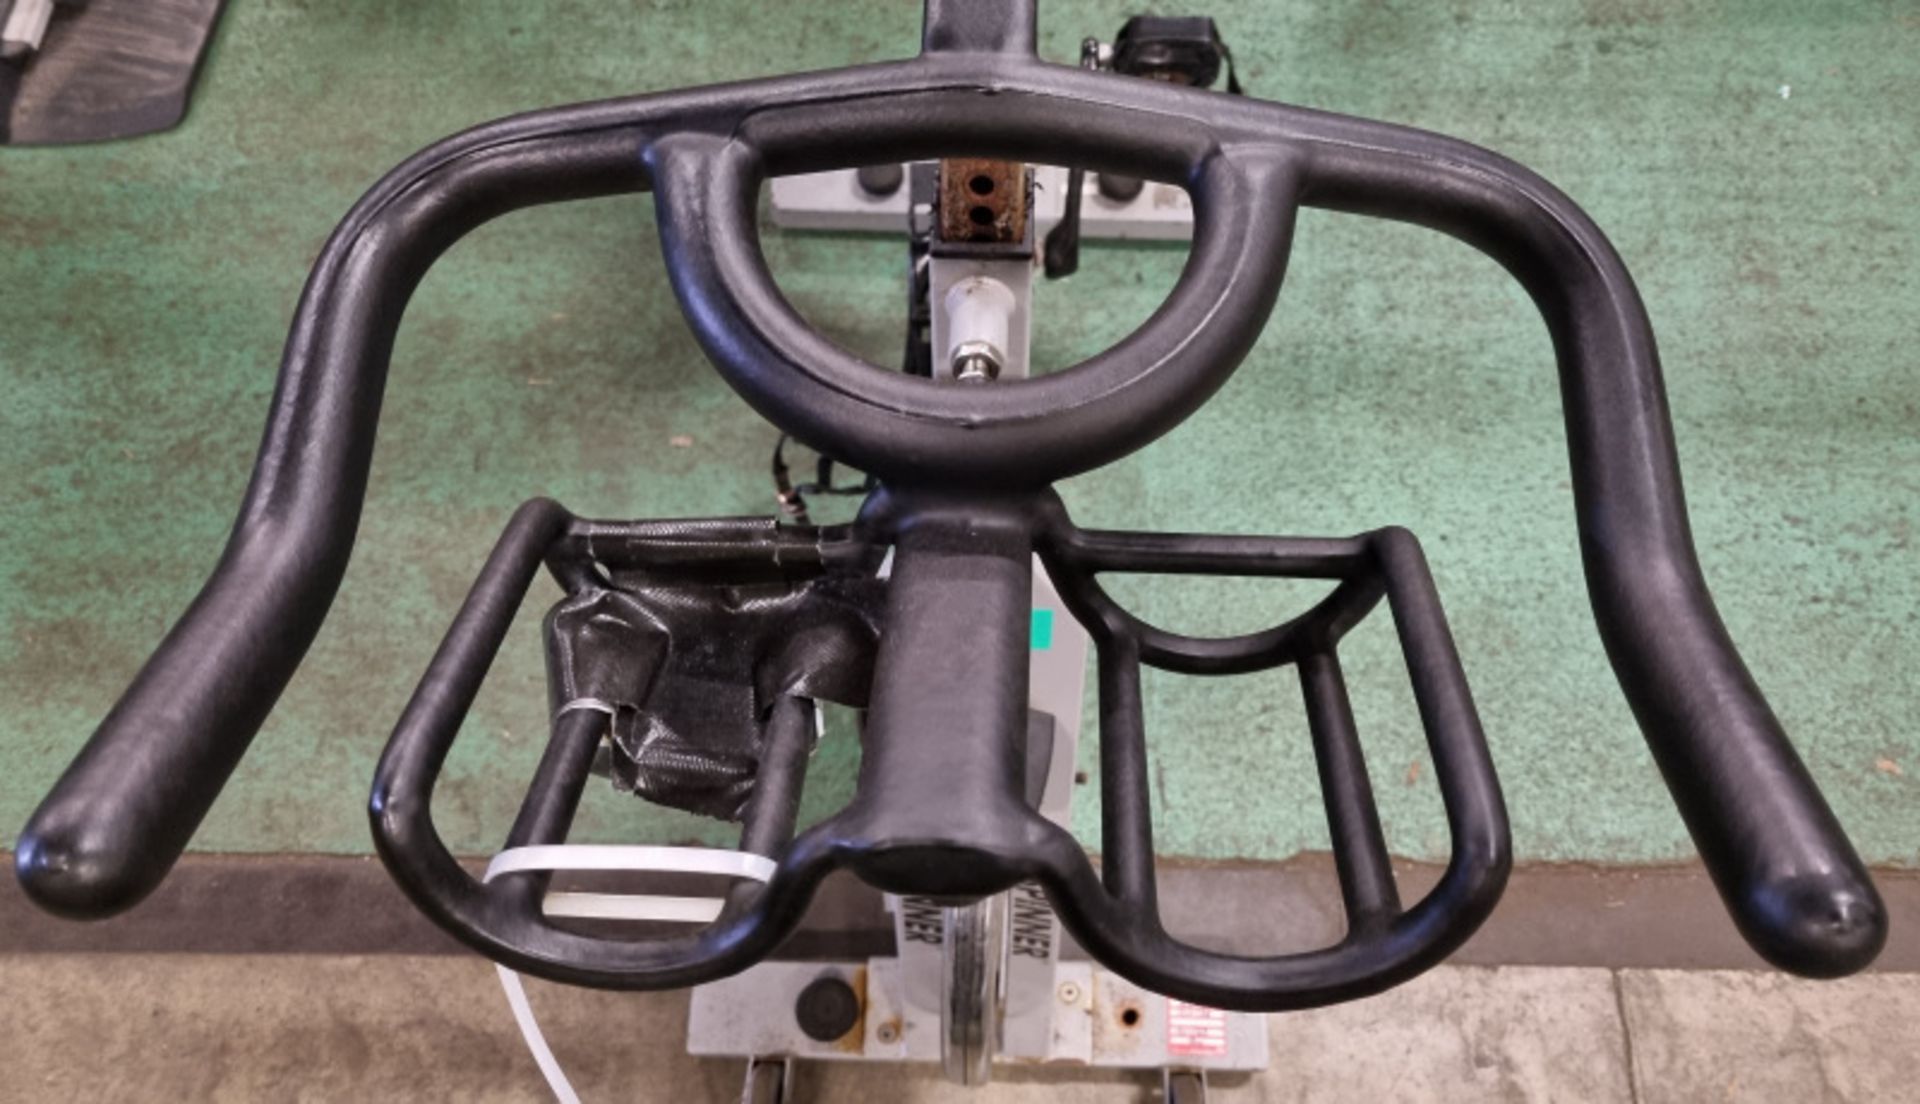 Star Trac spinner pro exercise bike - Image 7 of 7